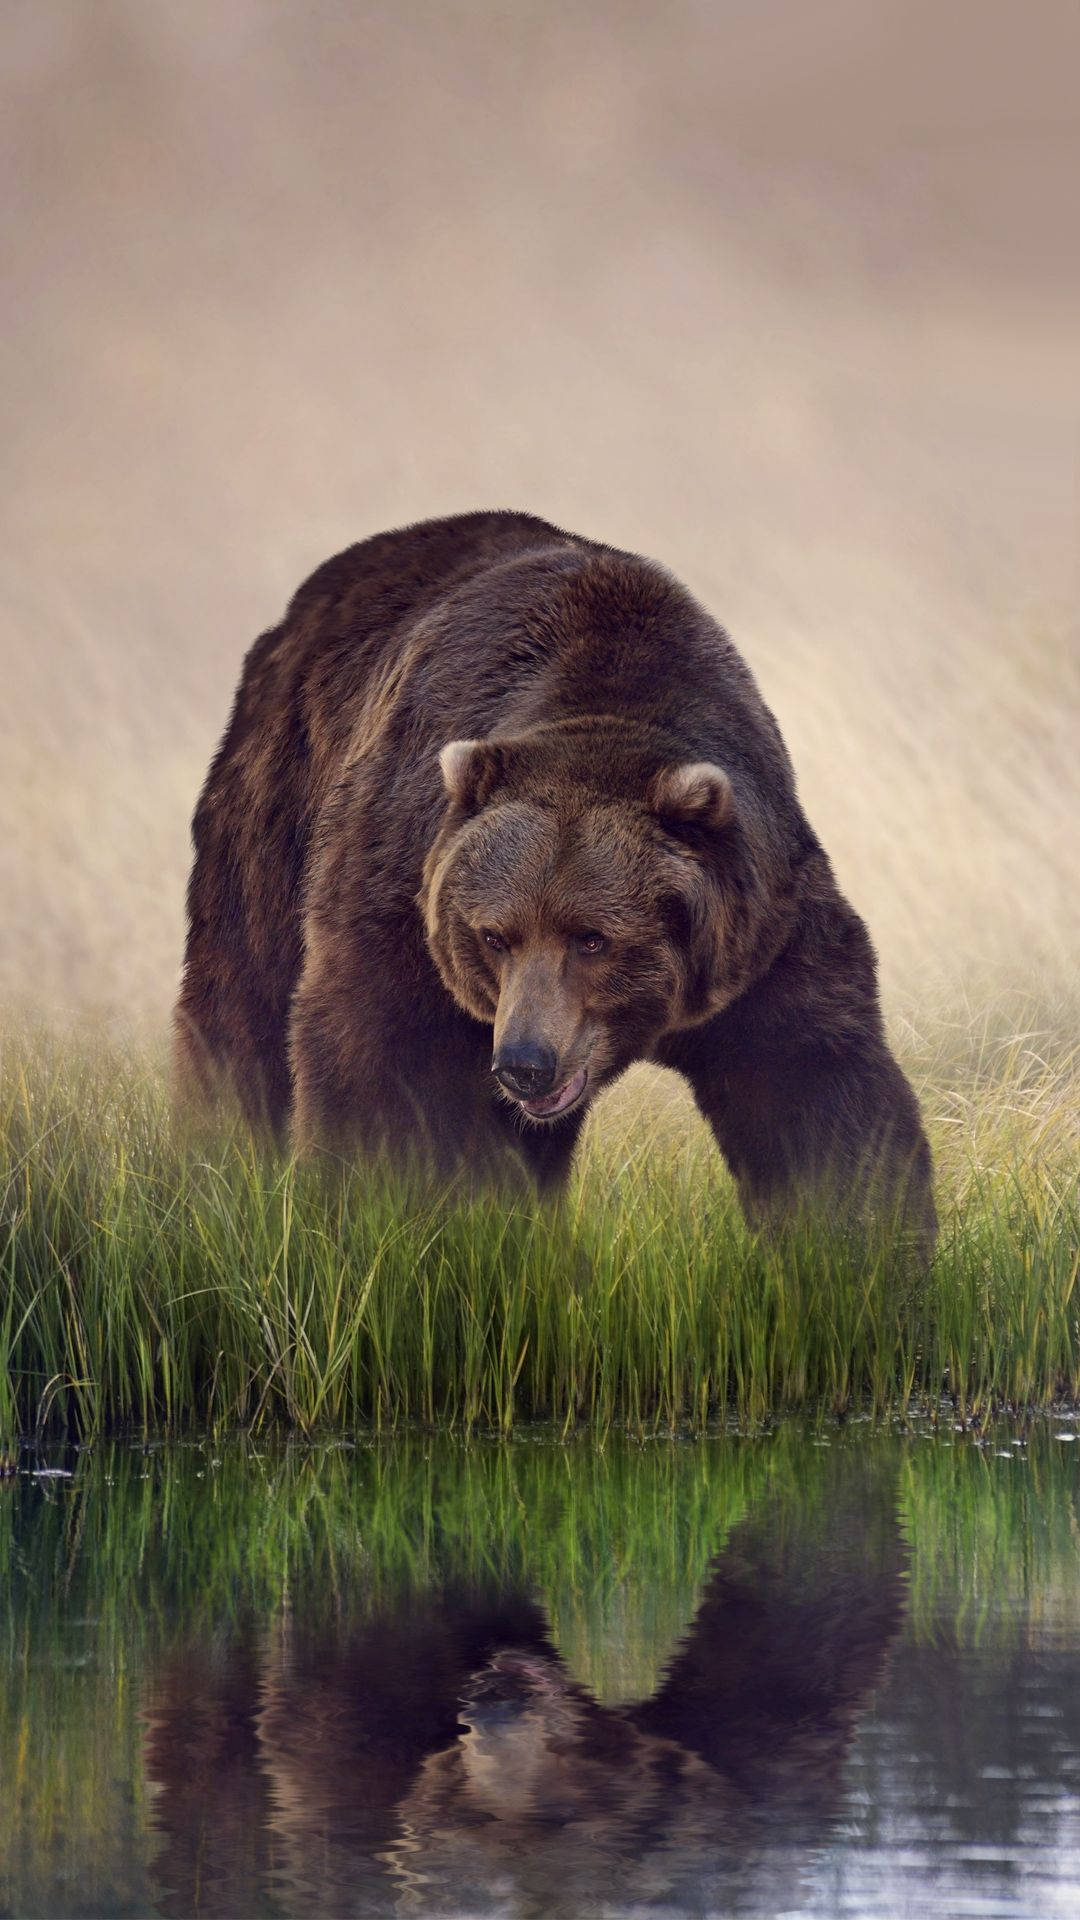 Brown Bear By Lake In Grass Wallpaper